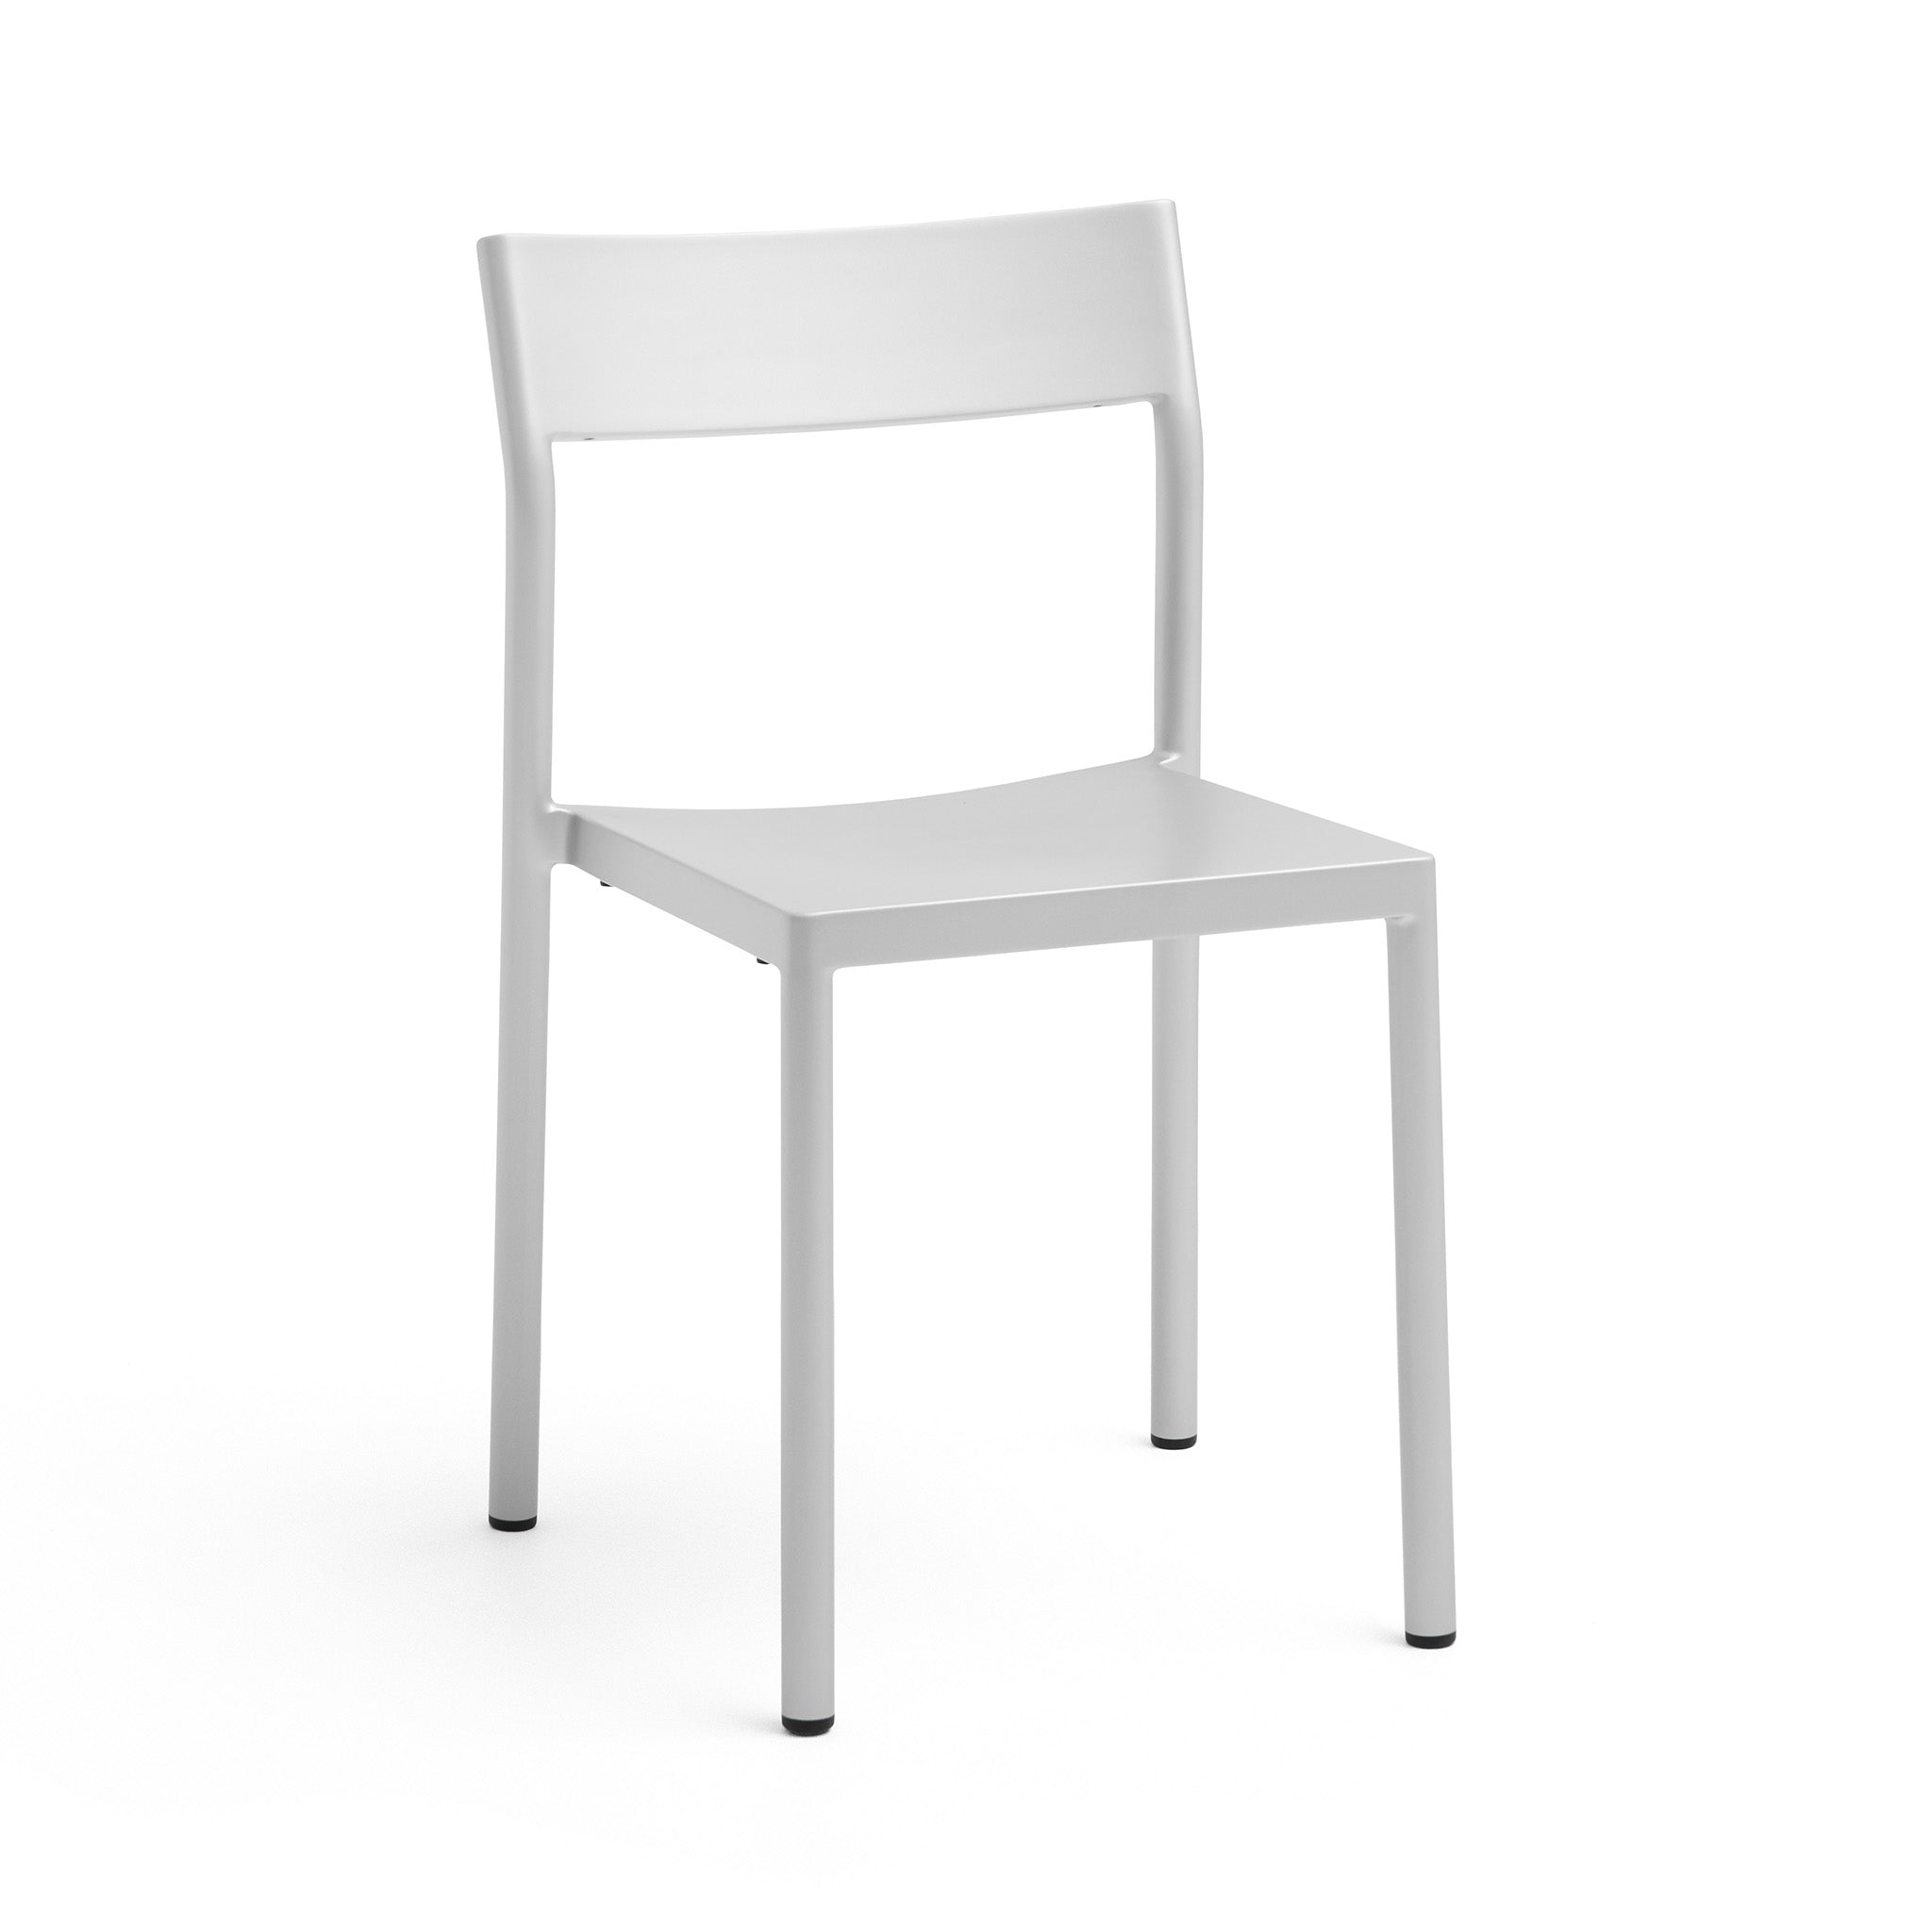 Type Chair By Jonas Trampedach